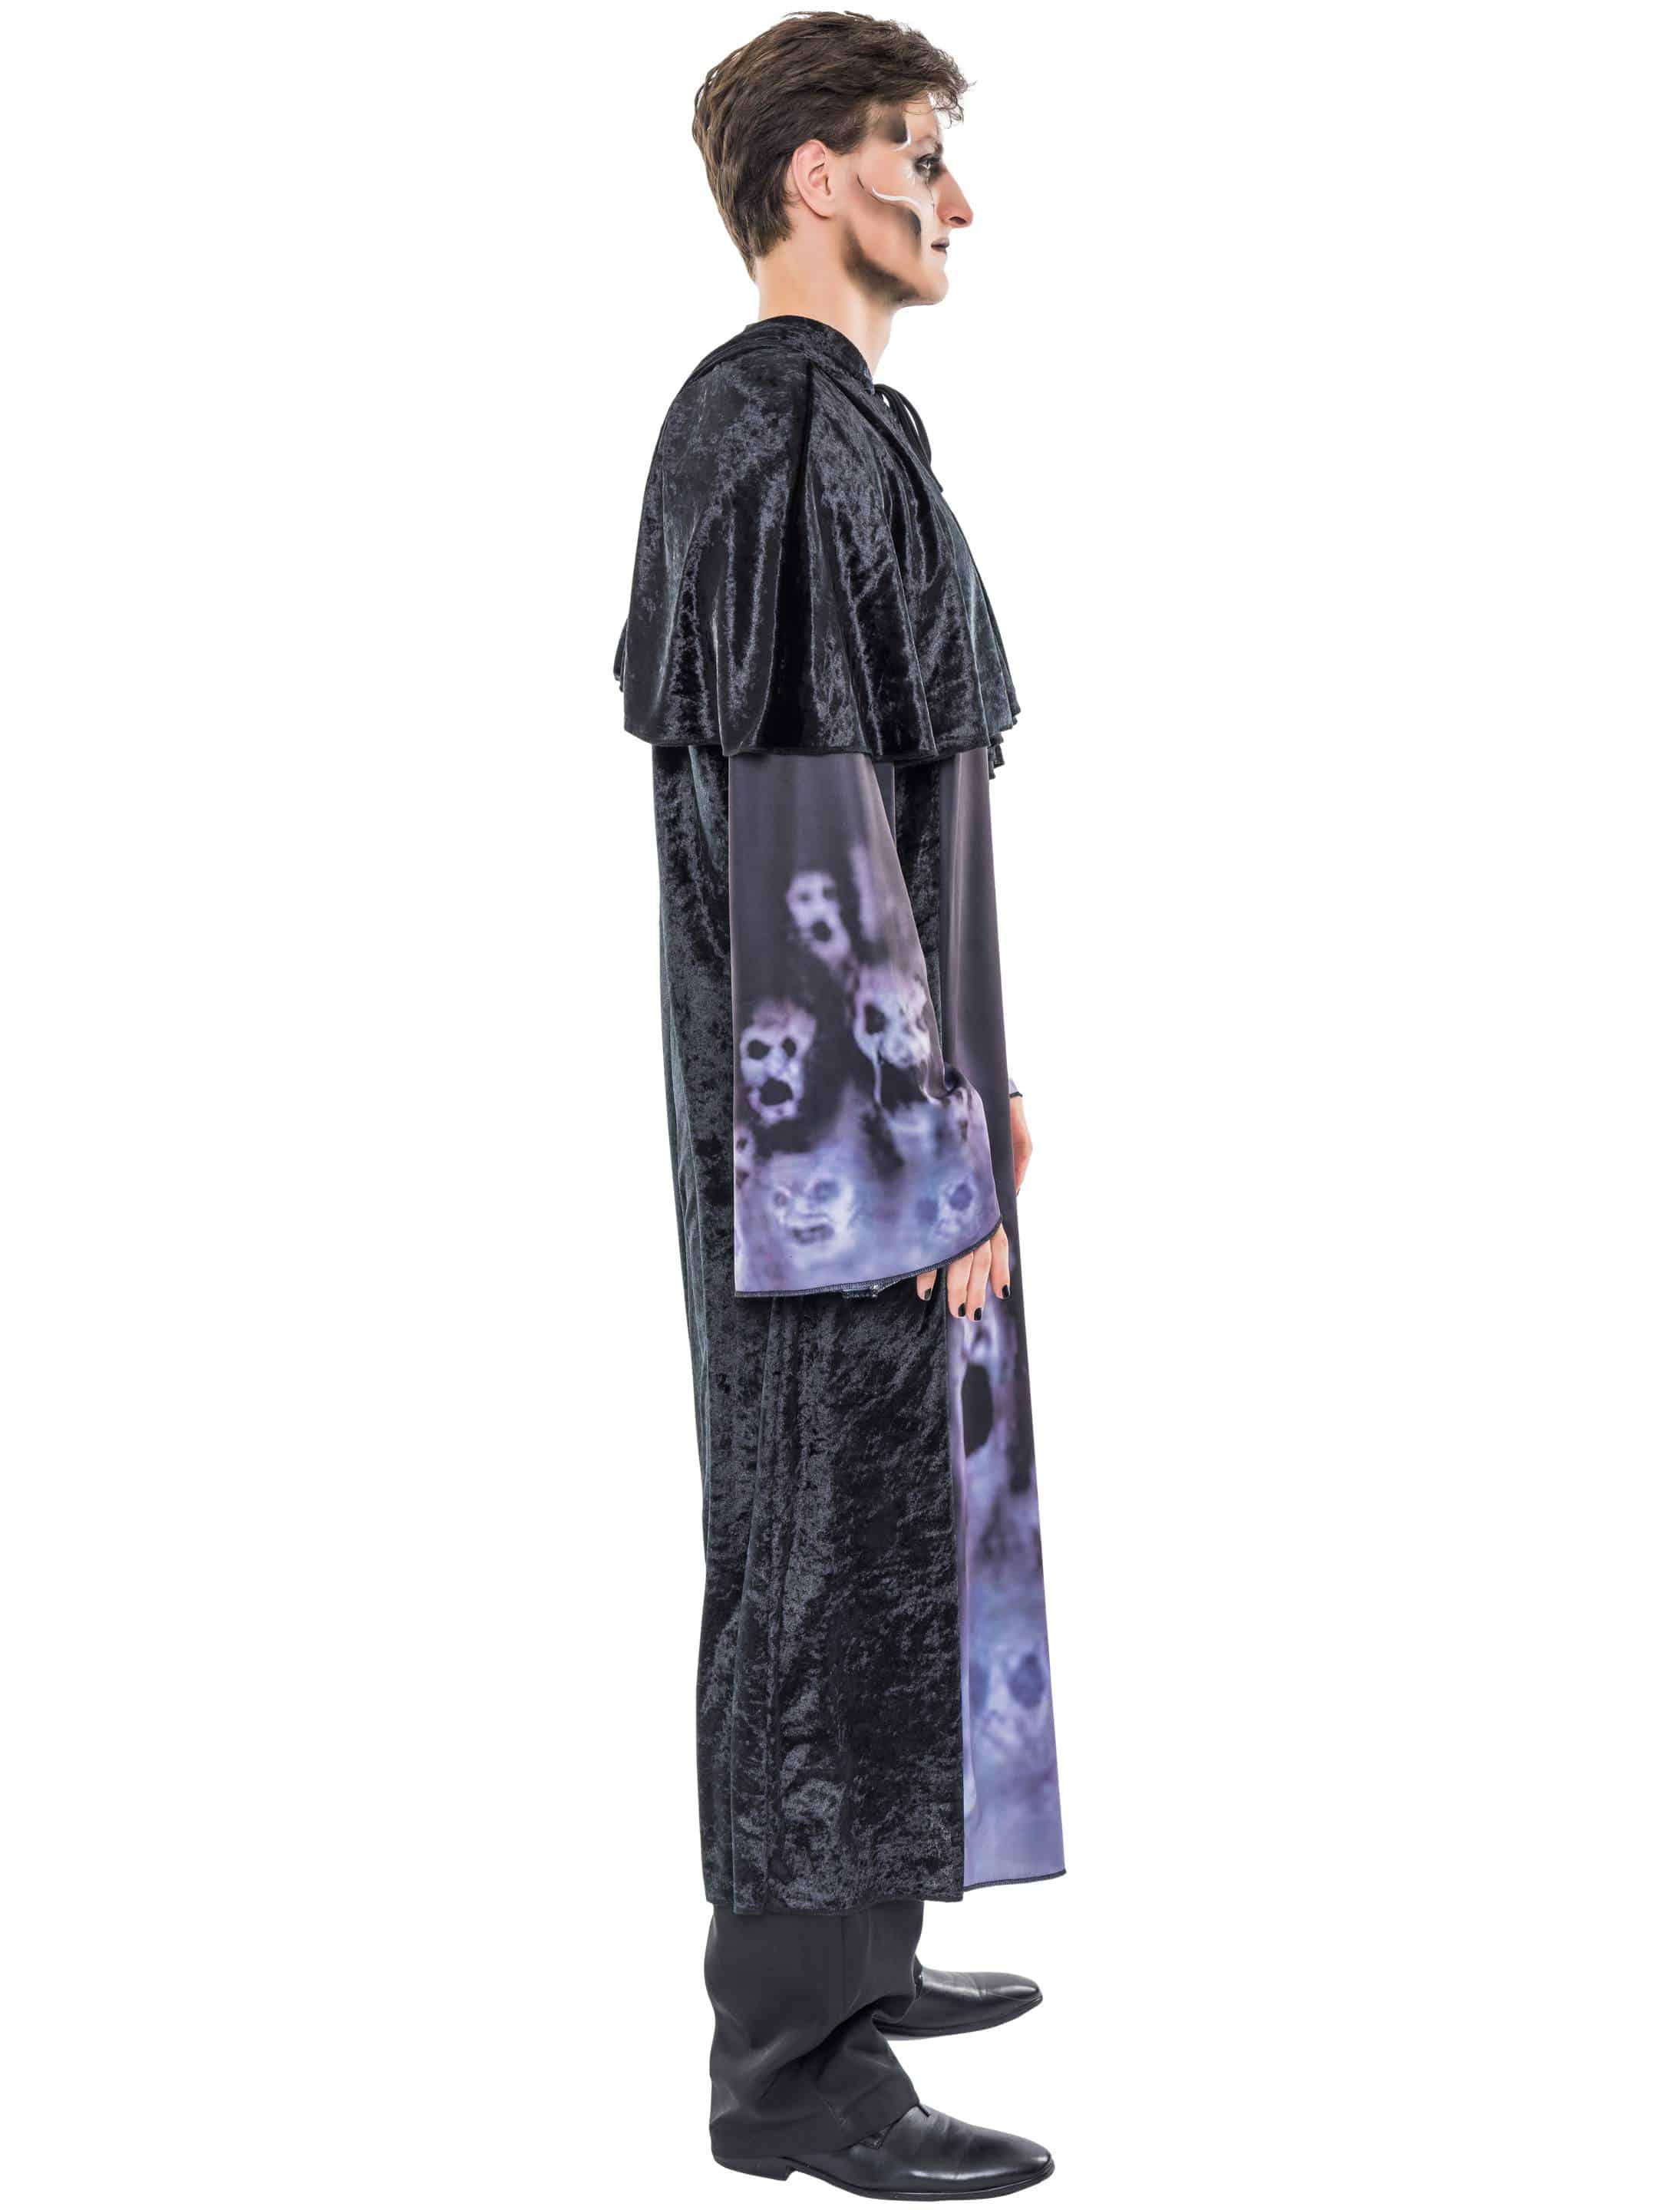 Robe mit Kapuze schwarz one size